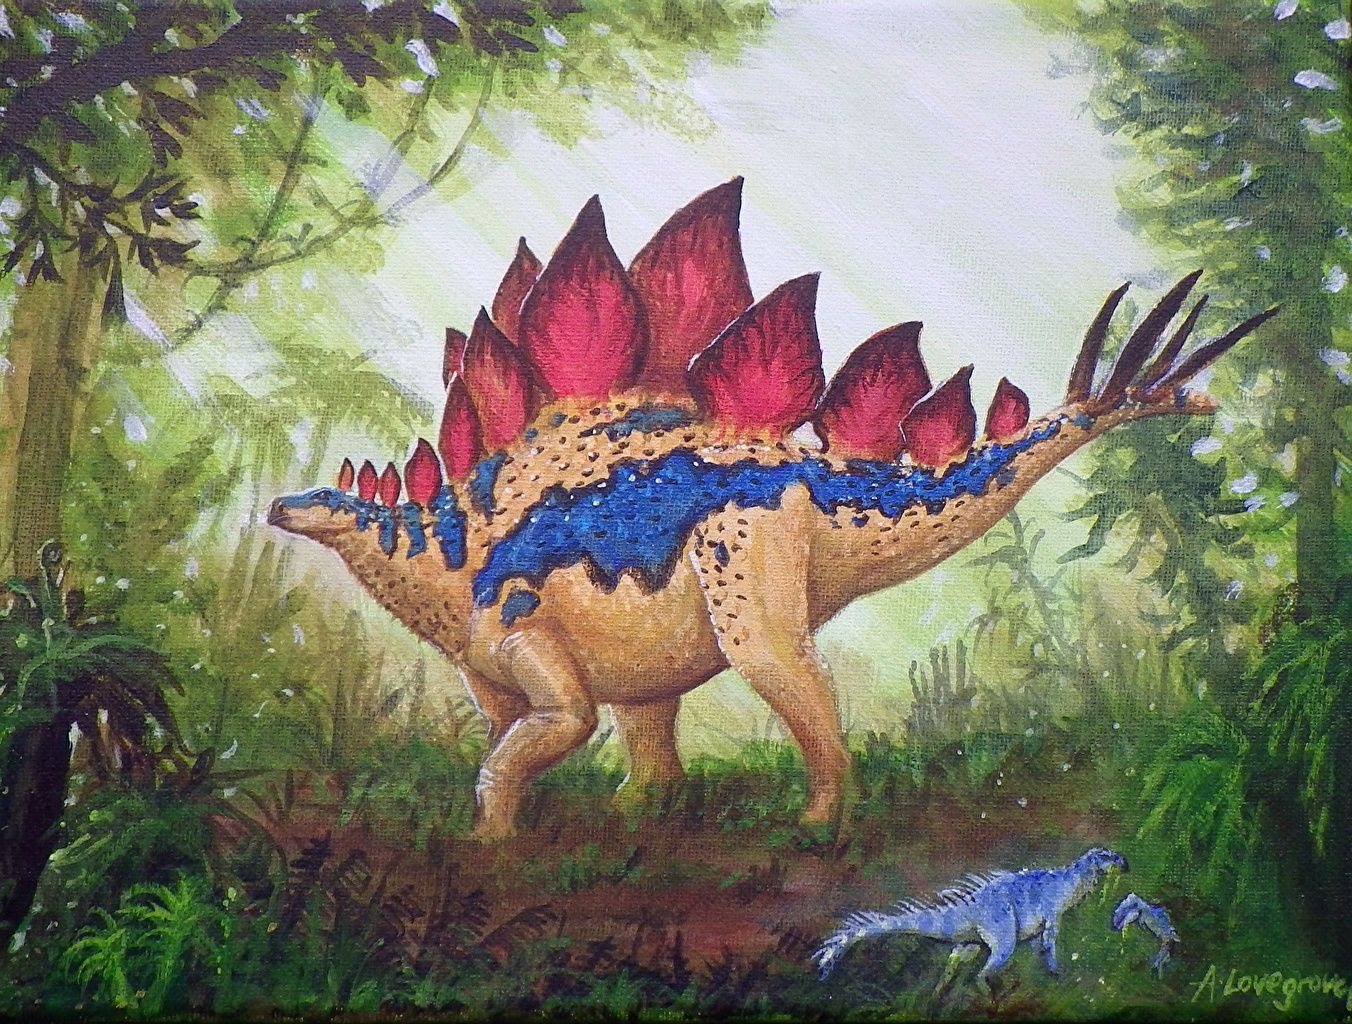 Image Alexander Lovegrove Dinosaurs Stegosaurus Pictorial art animal